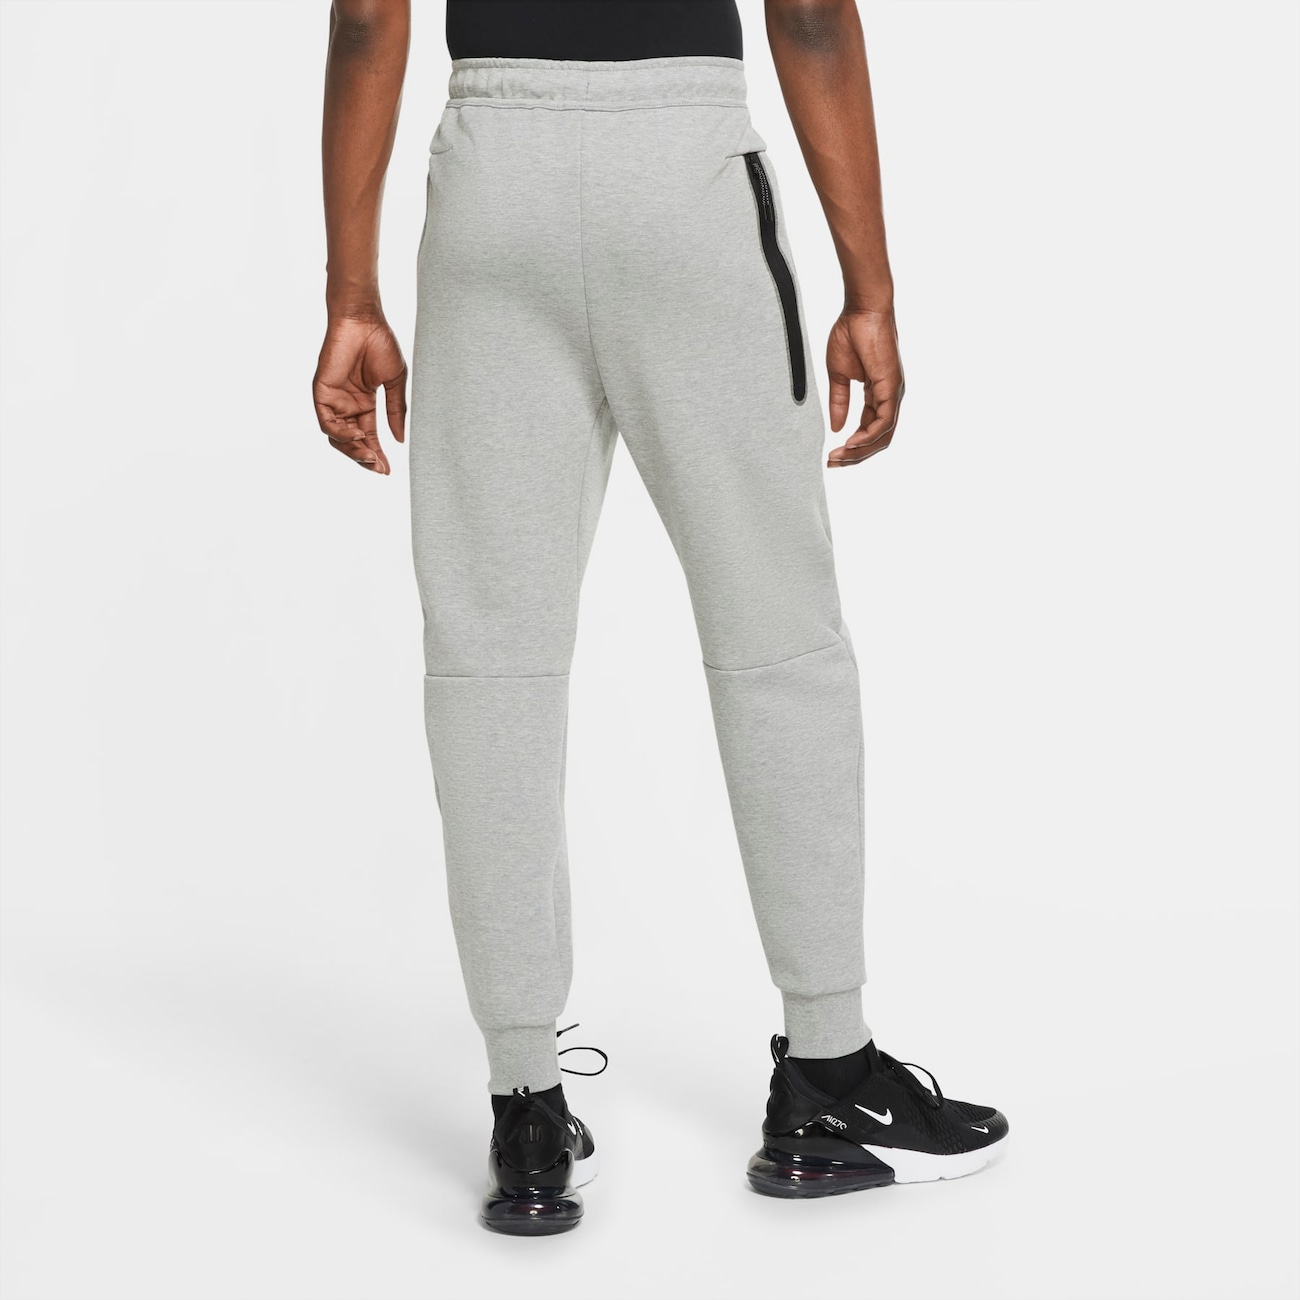 Calça Nike Sportswear Tech Fleece Masculina - Foto 2